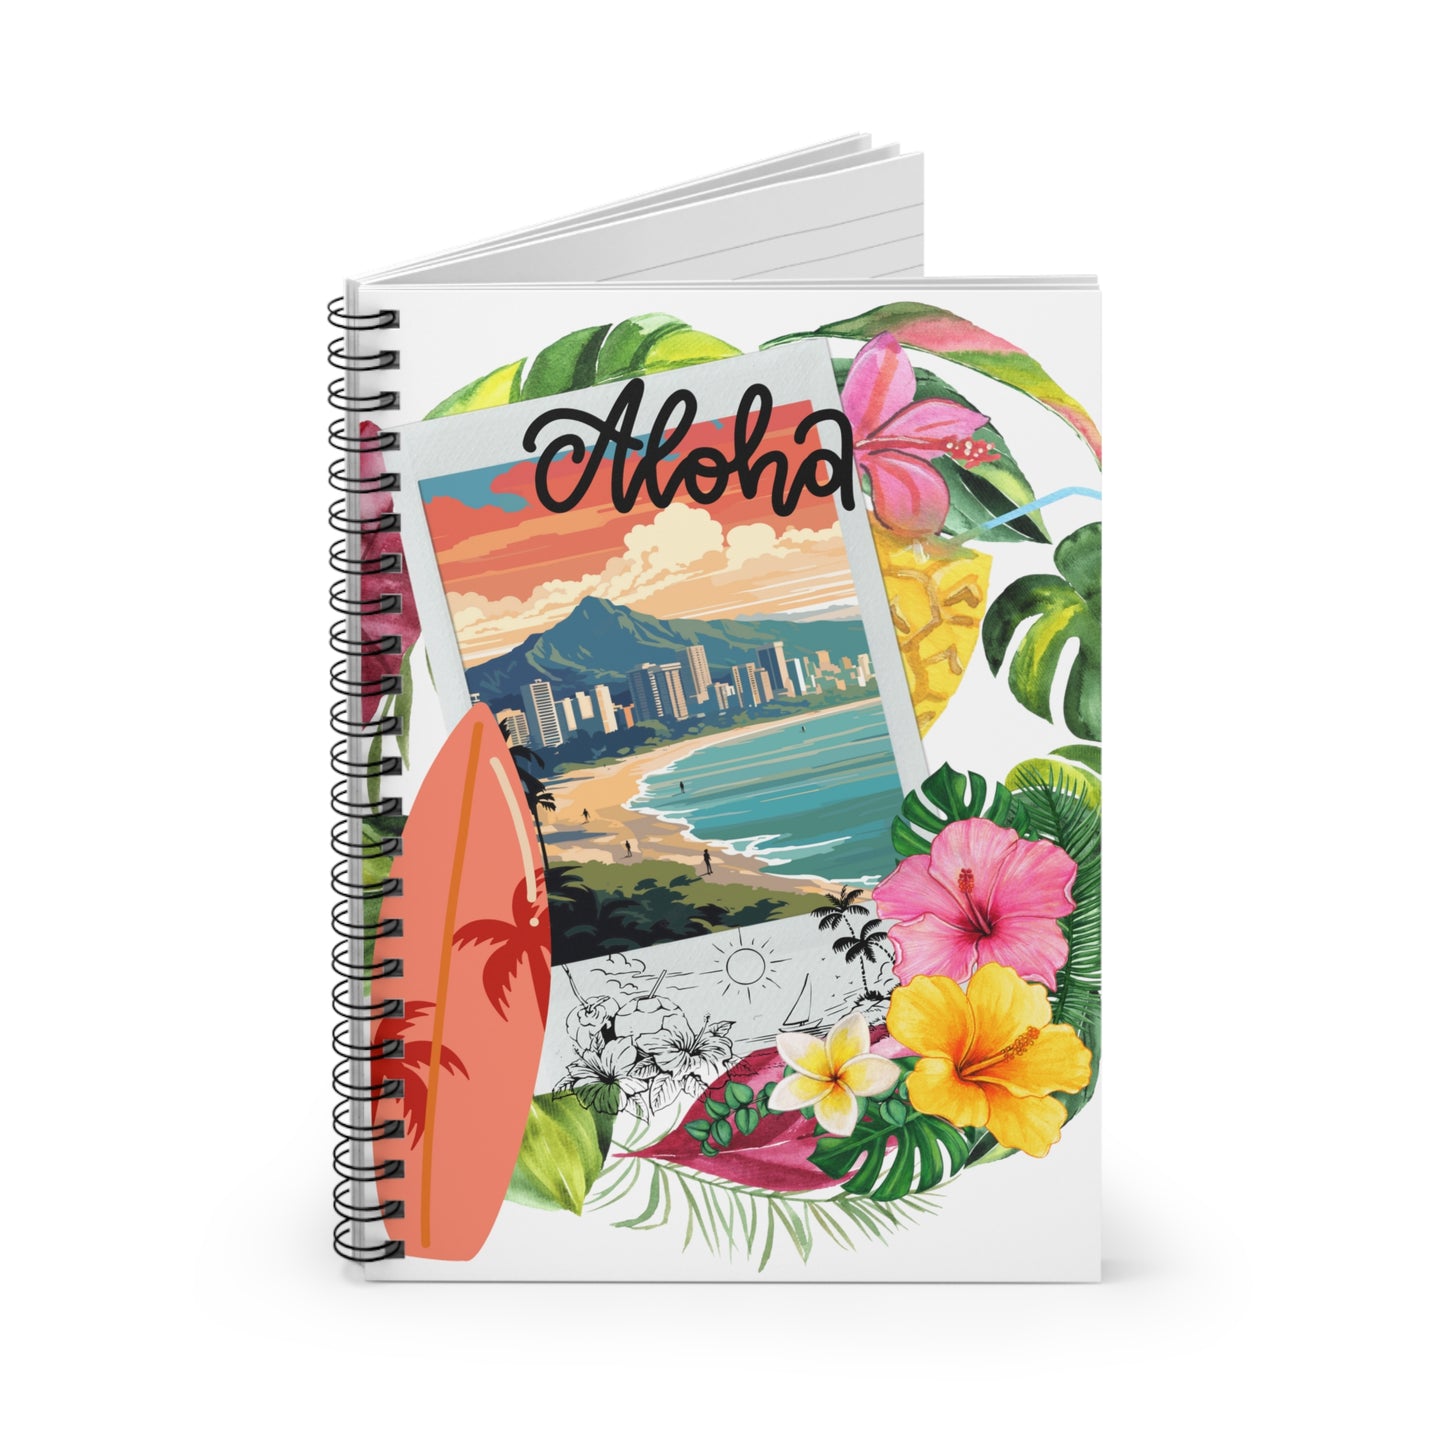 Waikiki Hawaii: Spiral Notebook - Log Books - Journals - Diaries - and More Custom Printed by TheGlassyLass.com